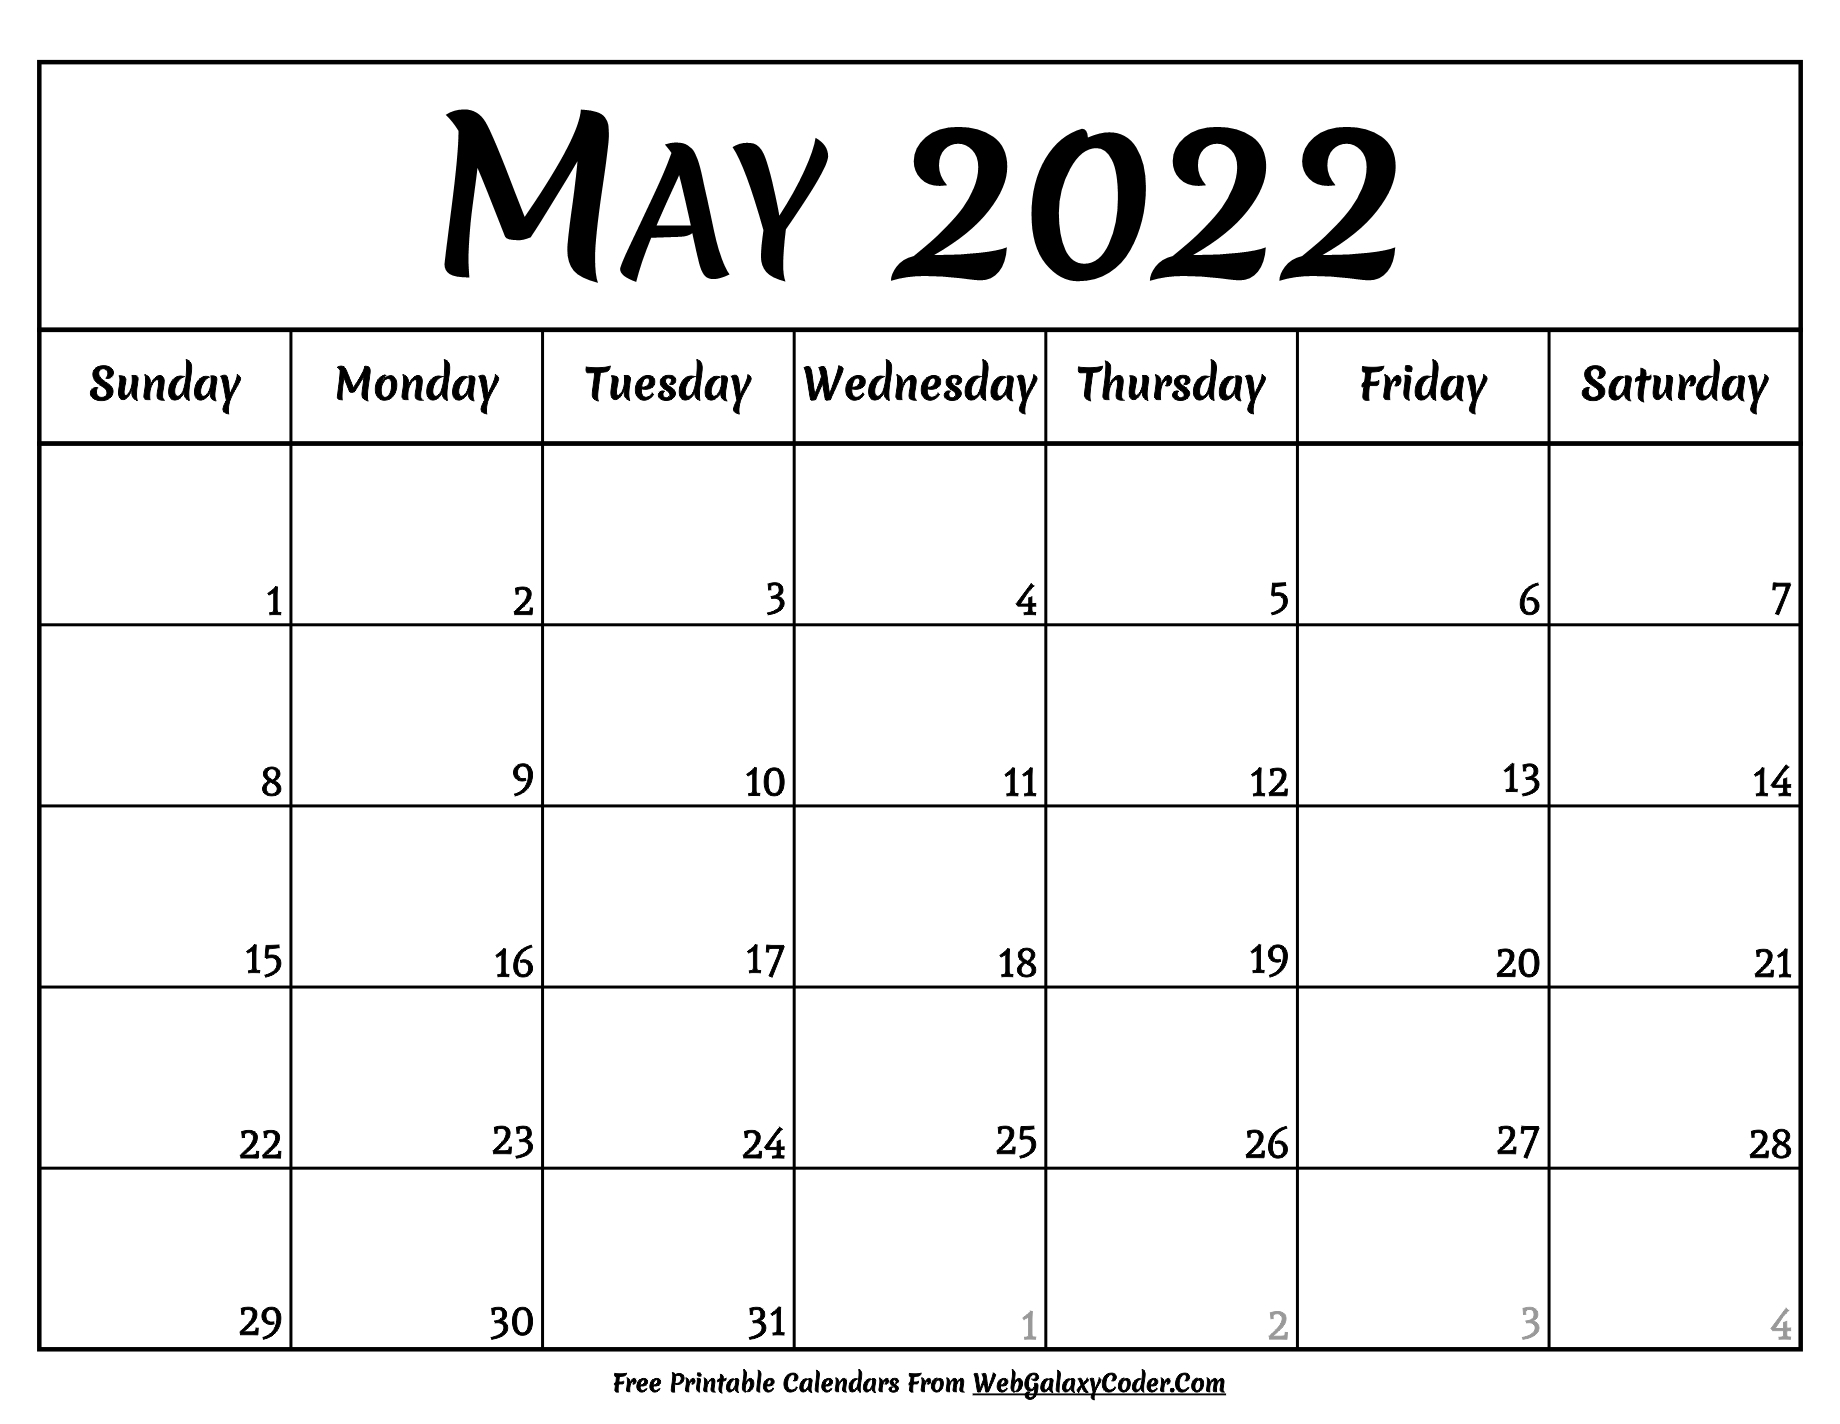 May 2022 Calendar - Printable Format - Print Now